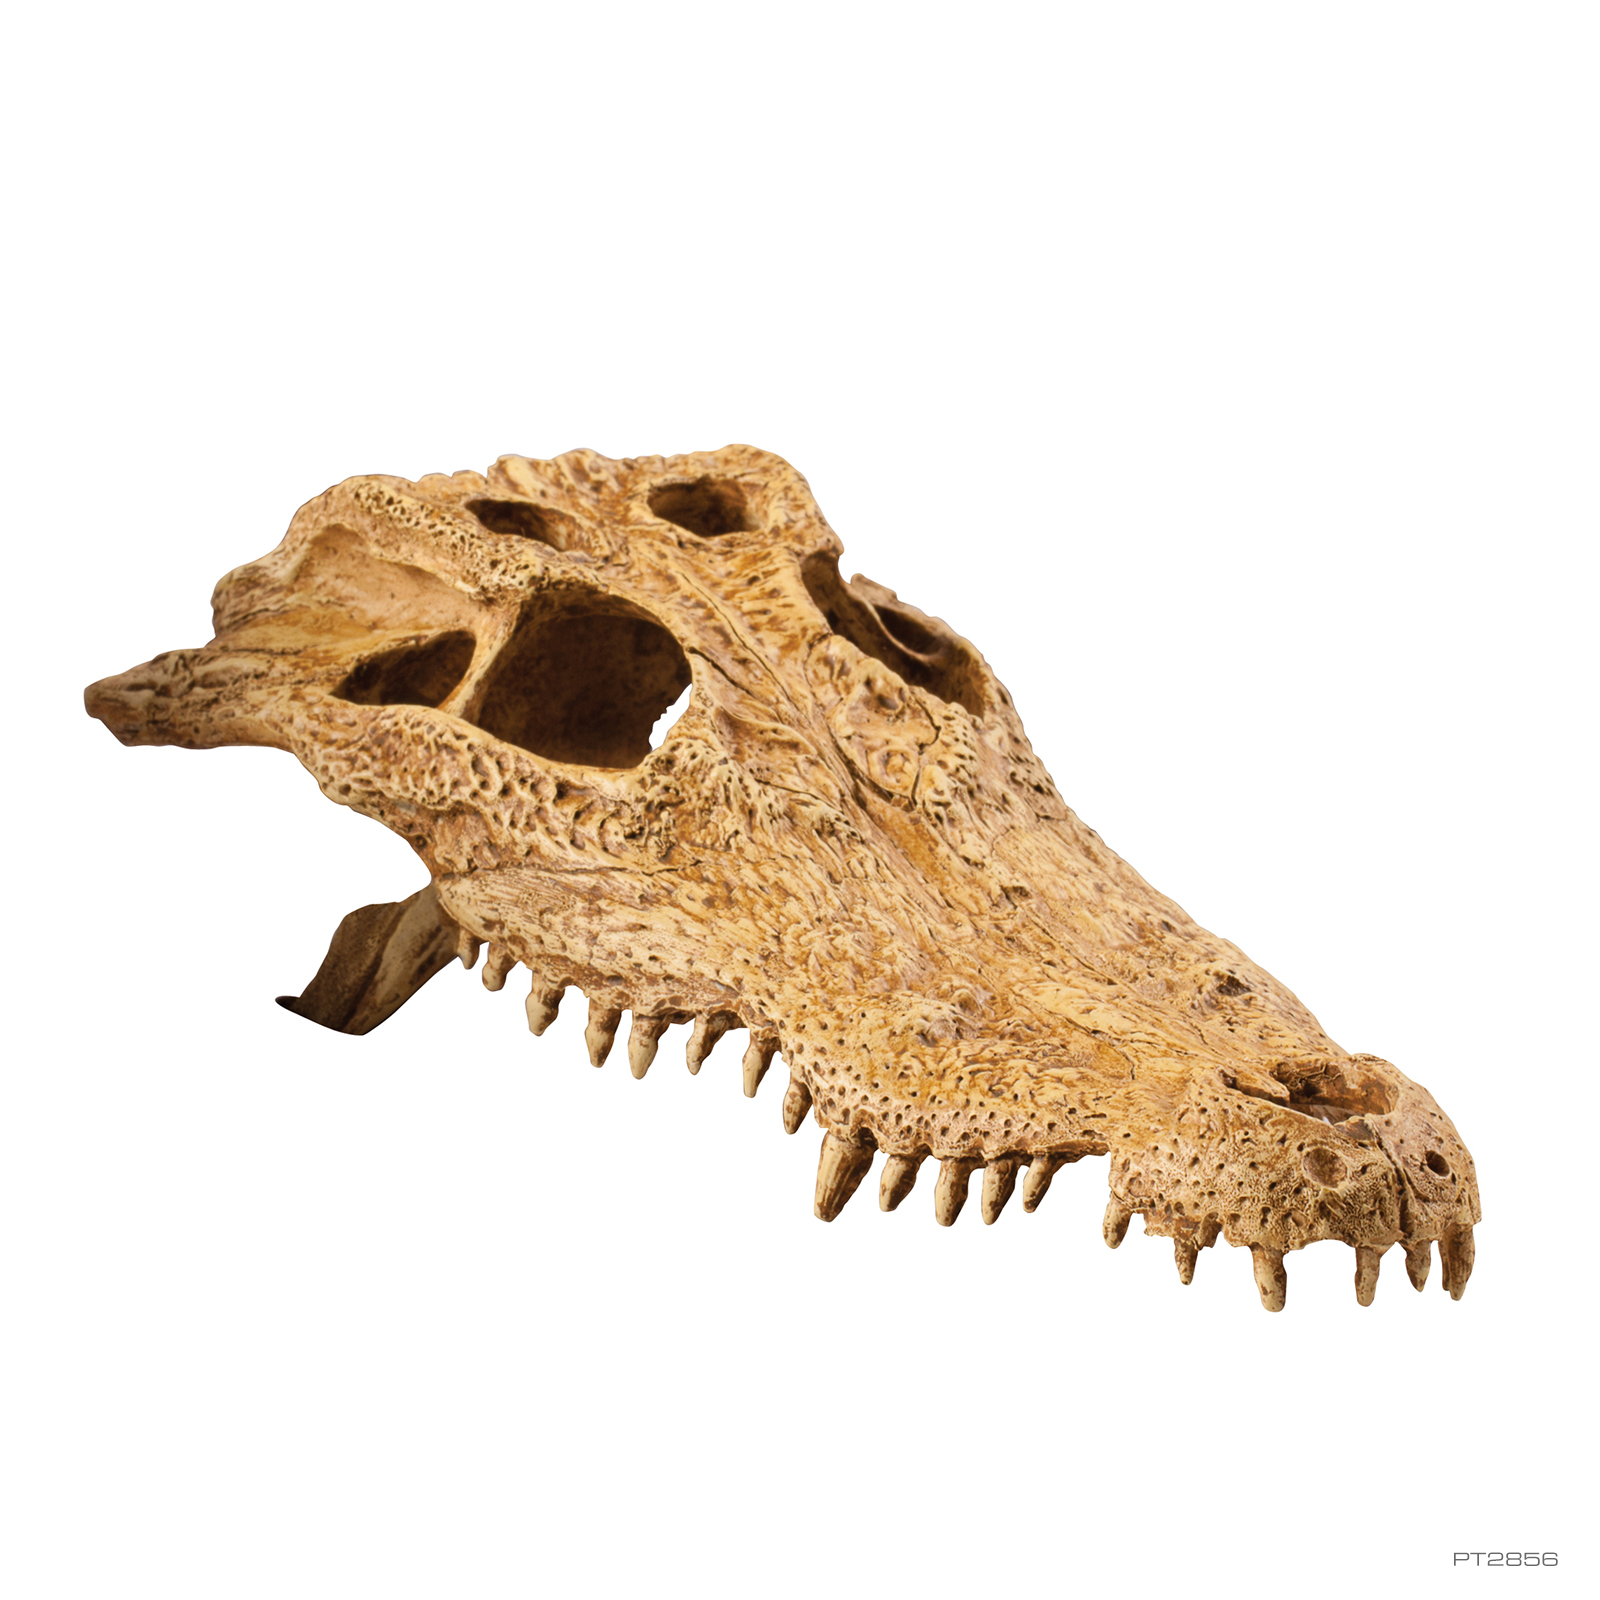 Crocodile skull. Toothy crocodile muzzle skeleton as an interior